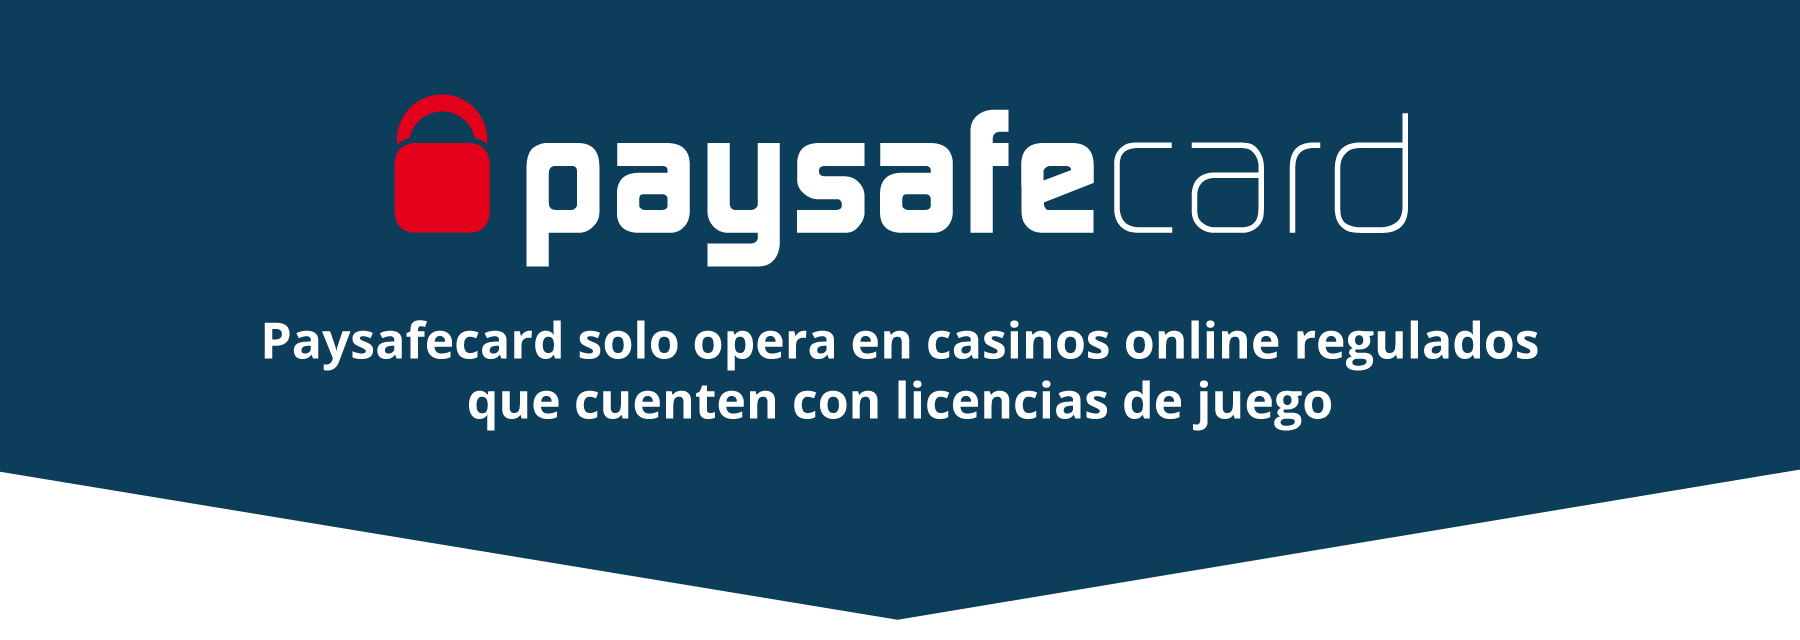 Paysafecard en casinos online de Latinoamérica